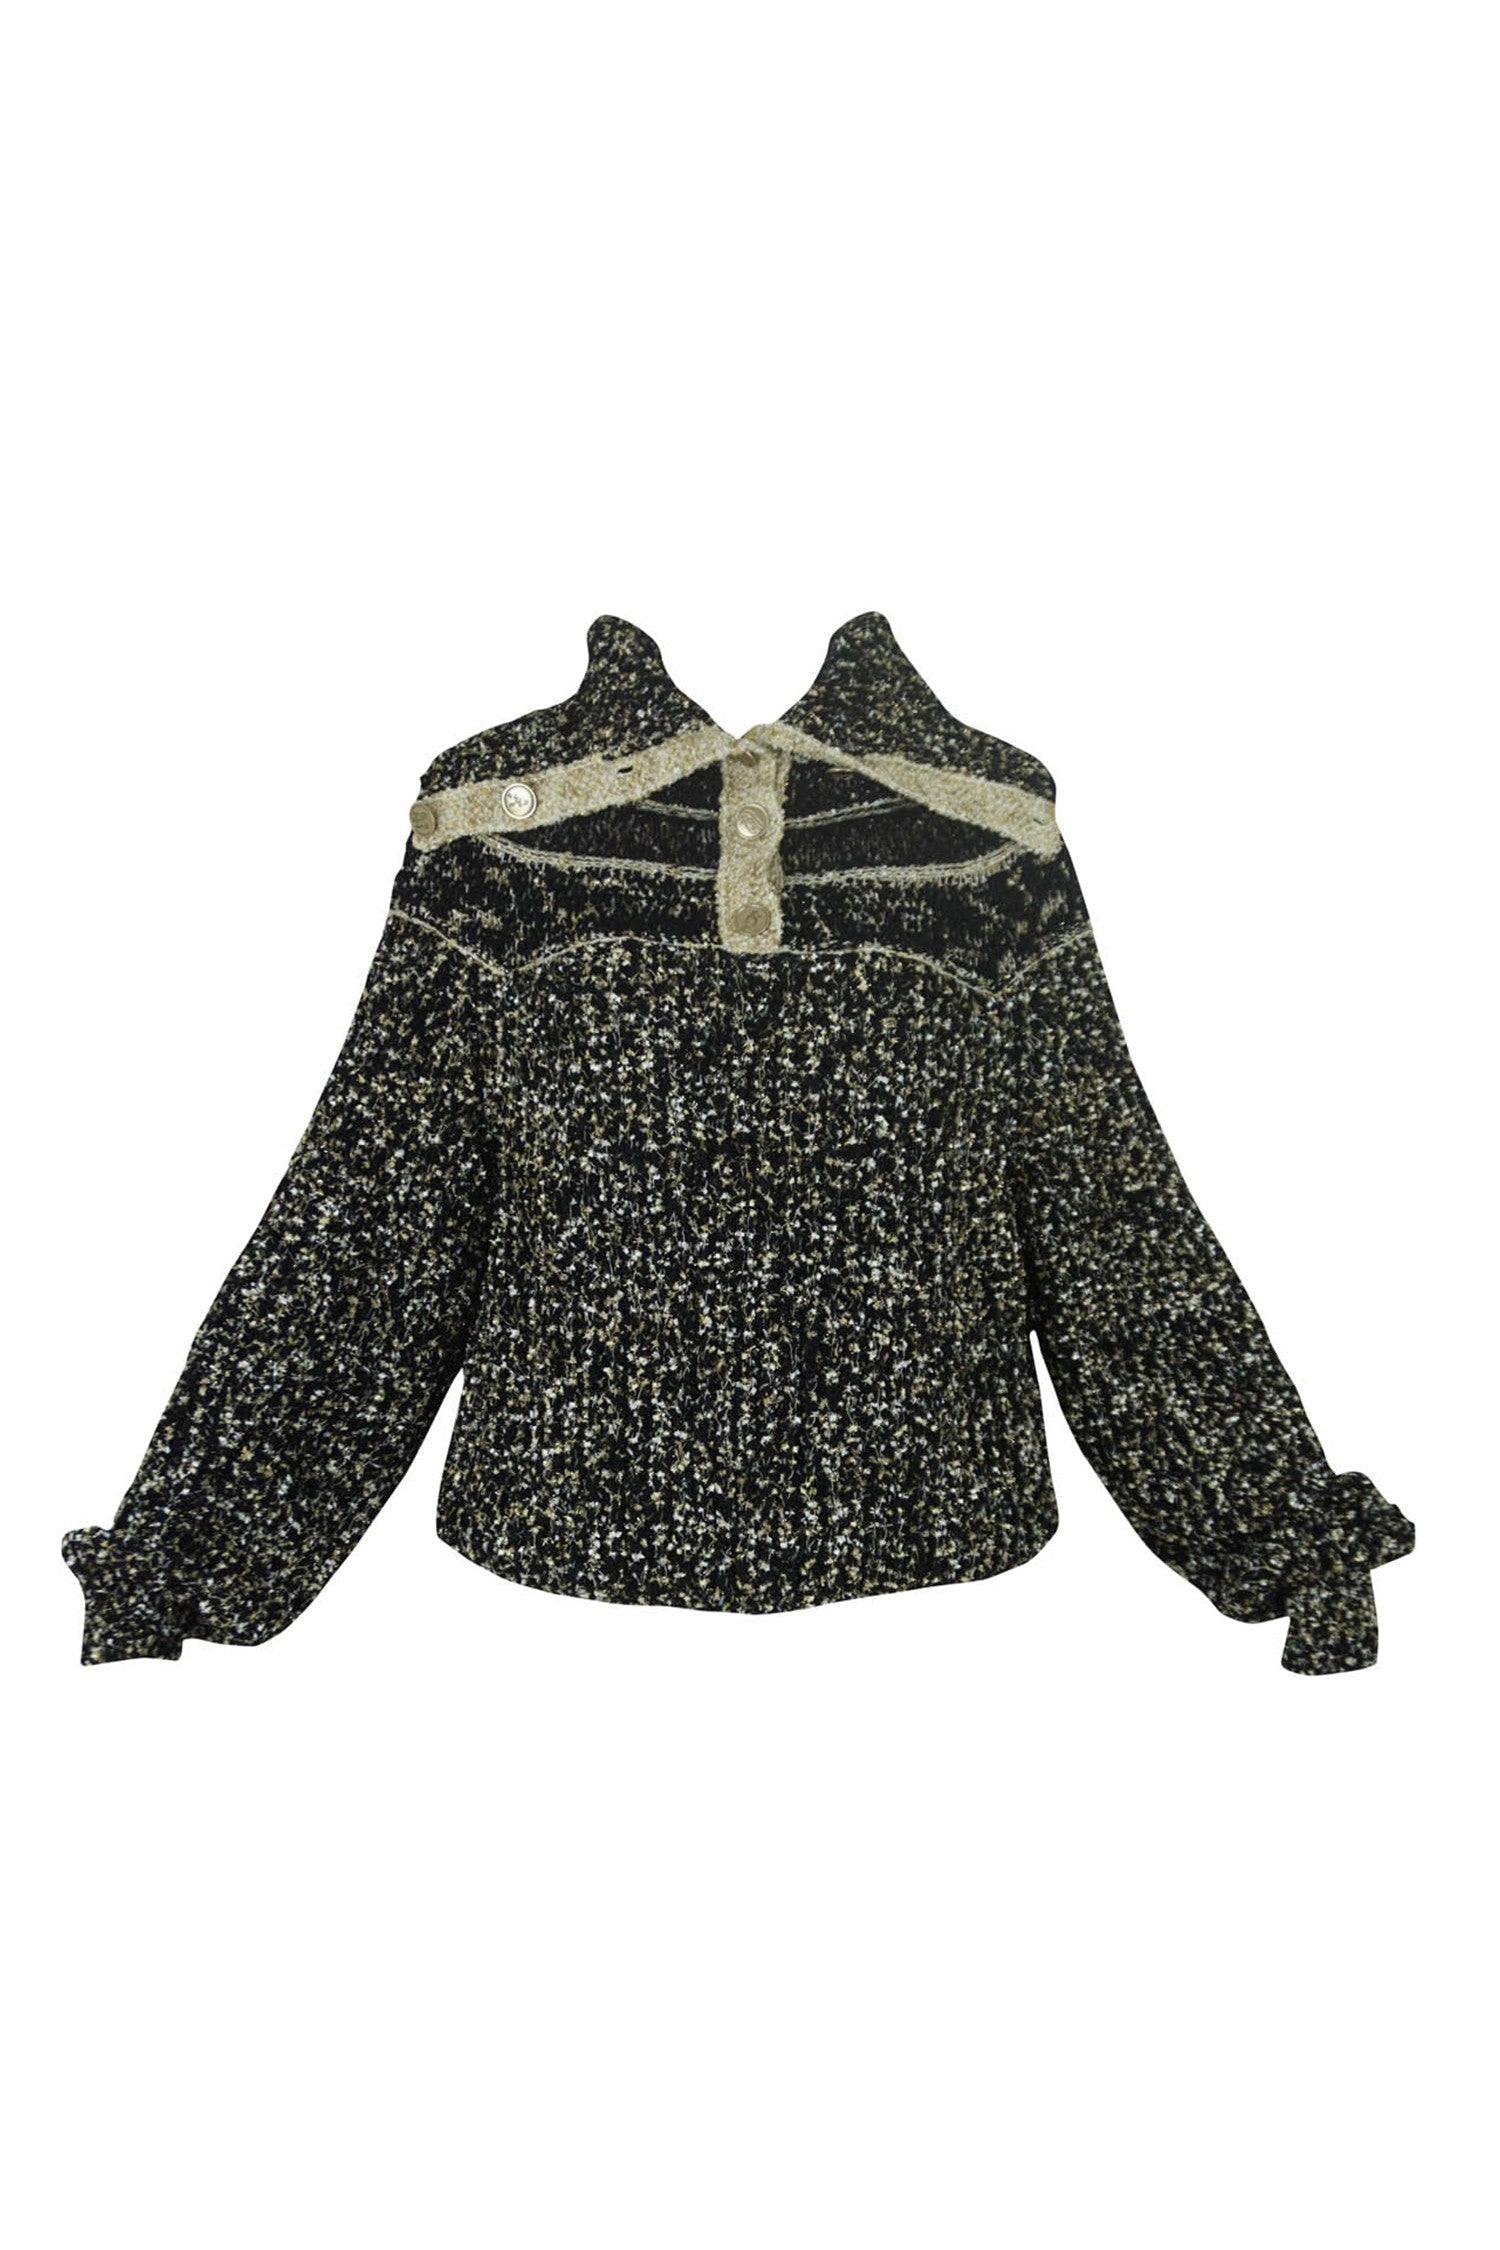 Chanel Lessage Sweater Metiers D'Art 2019 Egypt Sz 34 - Foxy Couture Carmel